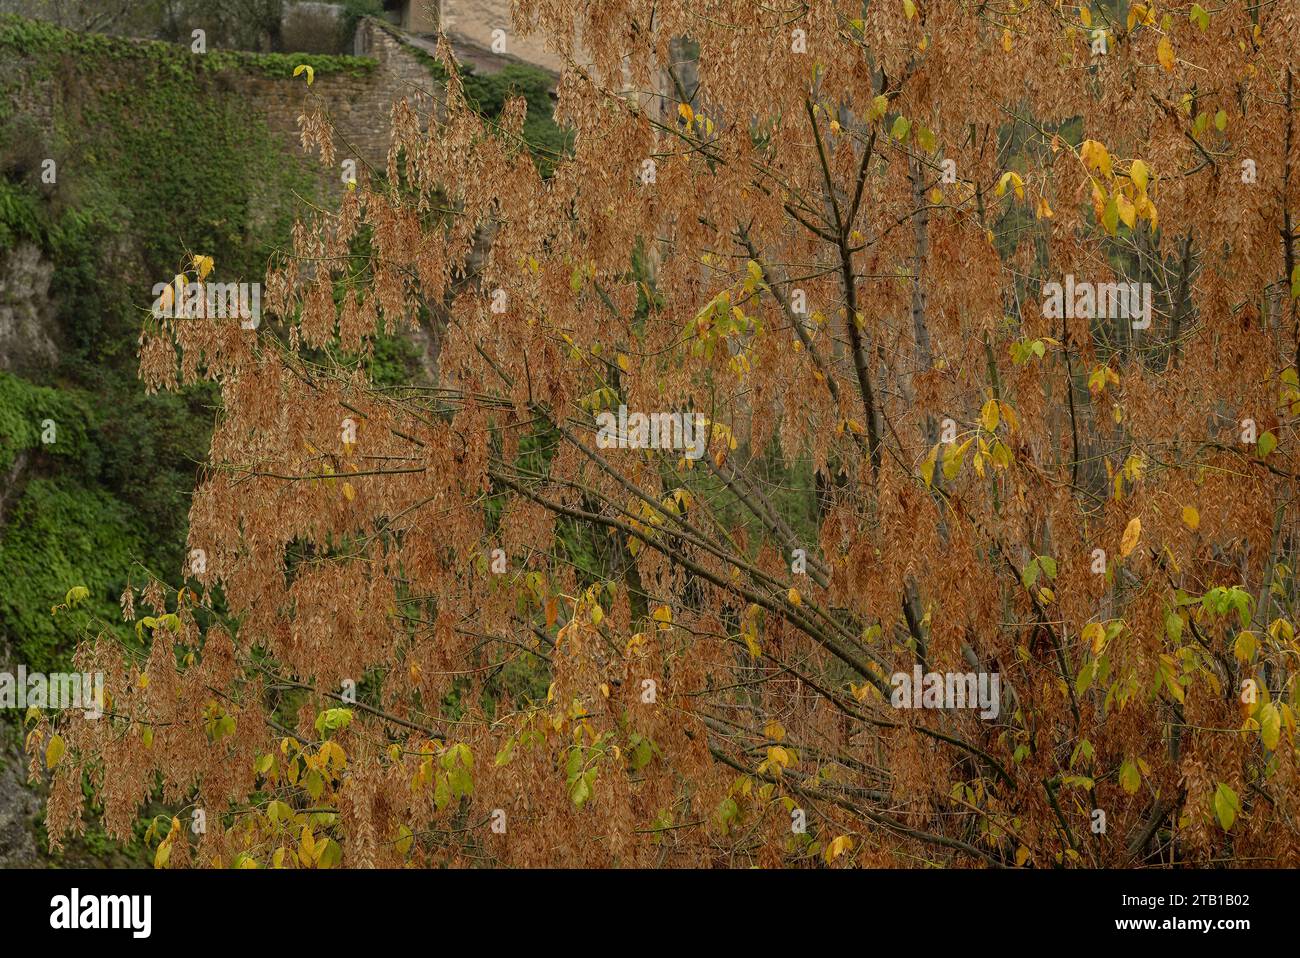 Box elder, Acer negundo, in fruit in autumn. Stock Photo